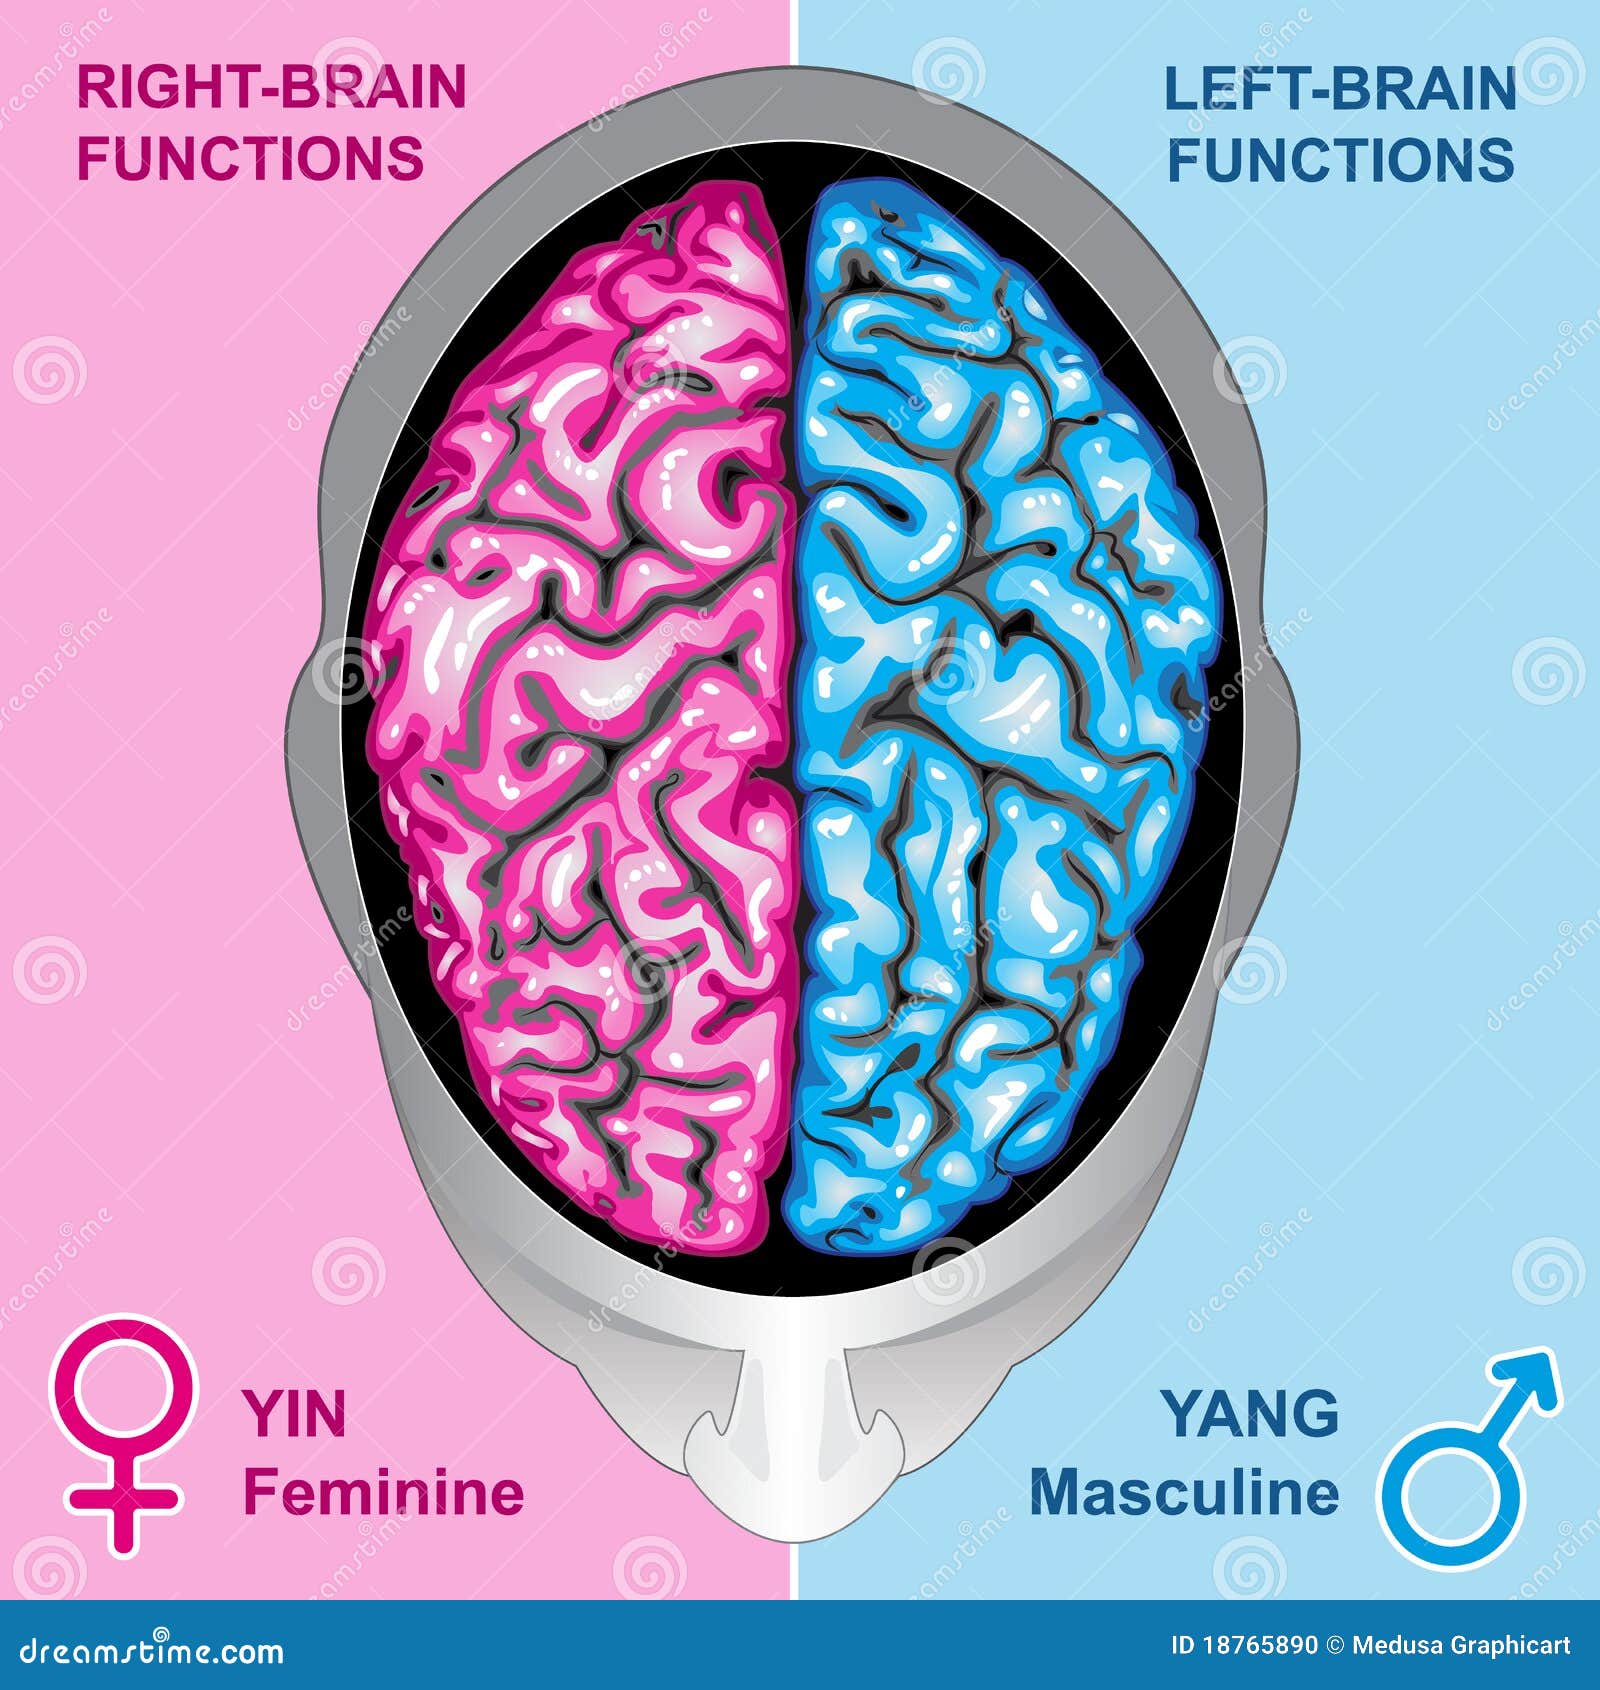 Левое полушарие доли. Левое и правое полушарие мозга. Левое полушарие мозга человек. Левое и правое полушарие мозга рисунок. Левый и правый мозг.